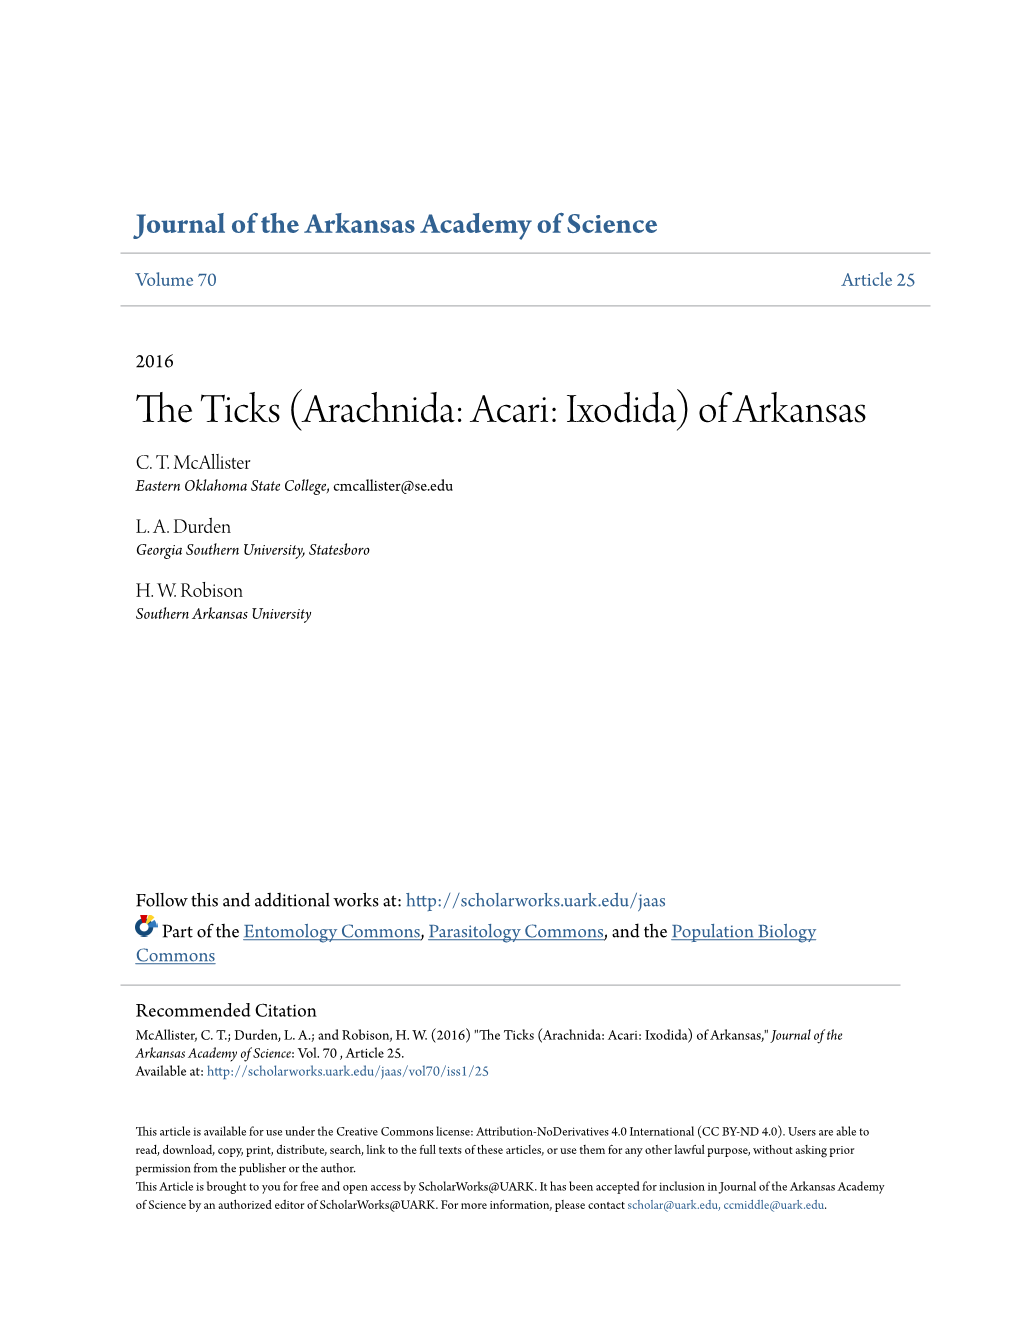 The Ticks (Arachnida: Acari: Ixodida) of Arkansas